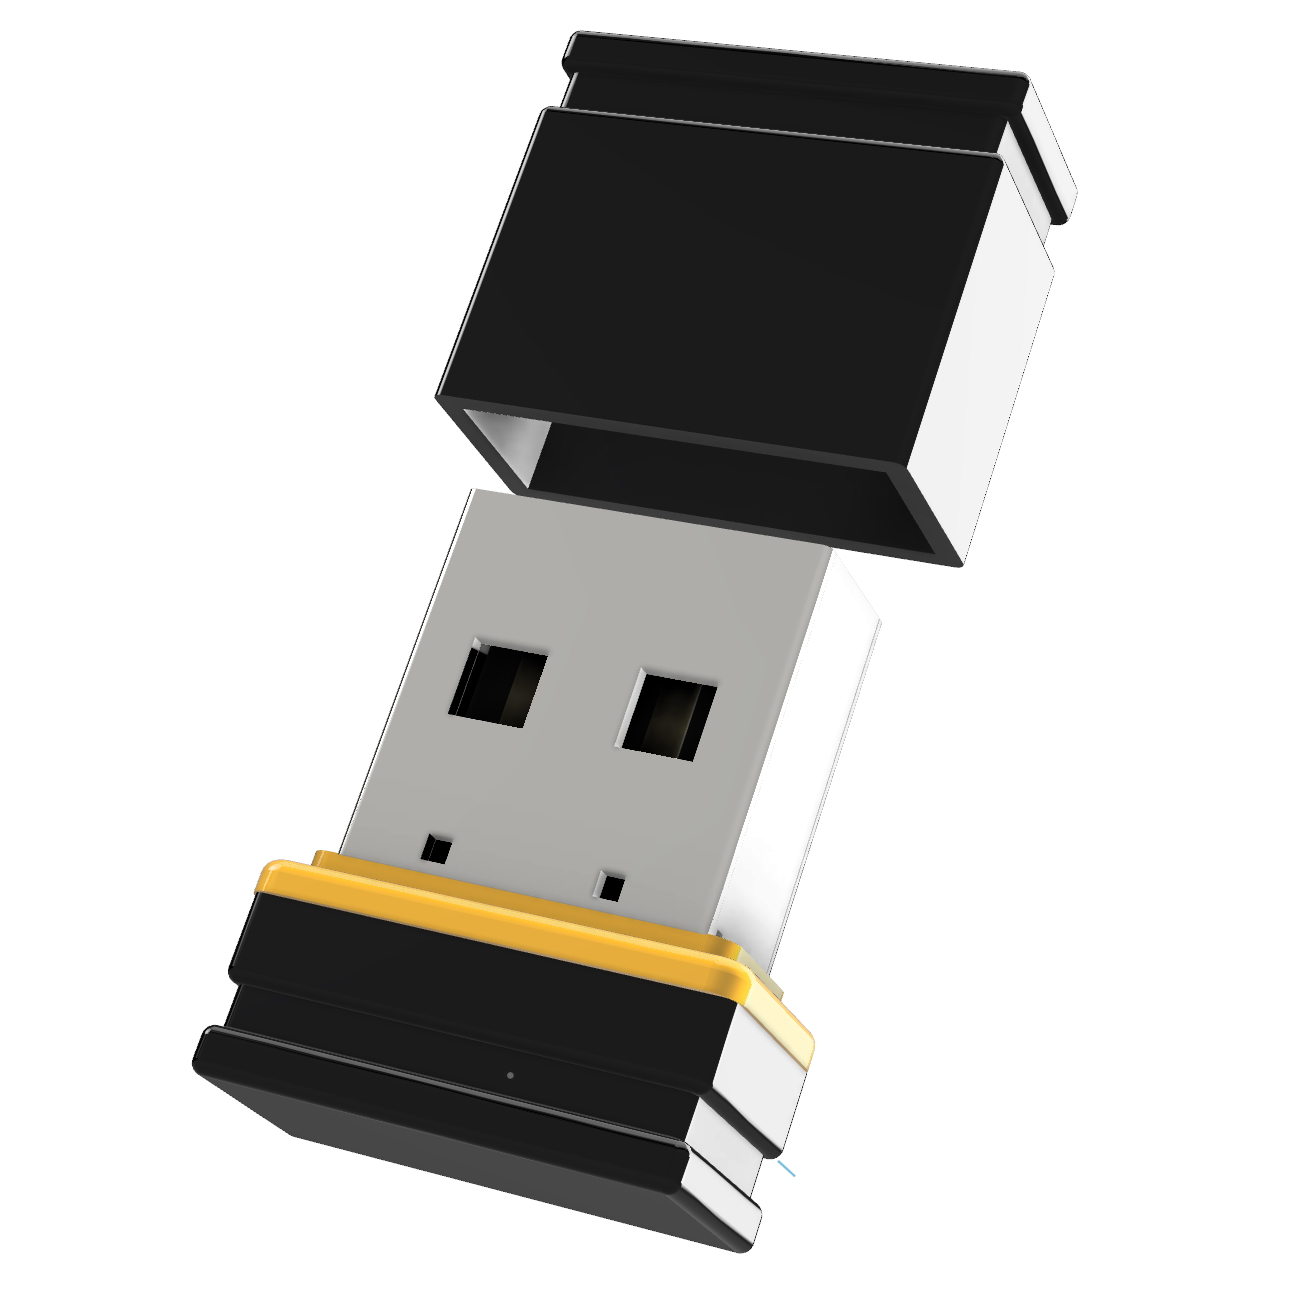 GB) (Schwarz/Gelb, ®ULTRA USB 64 GERMANY Mini USB-Stick P1